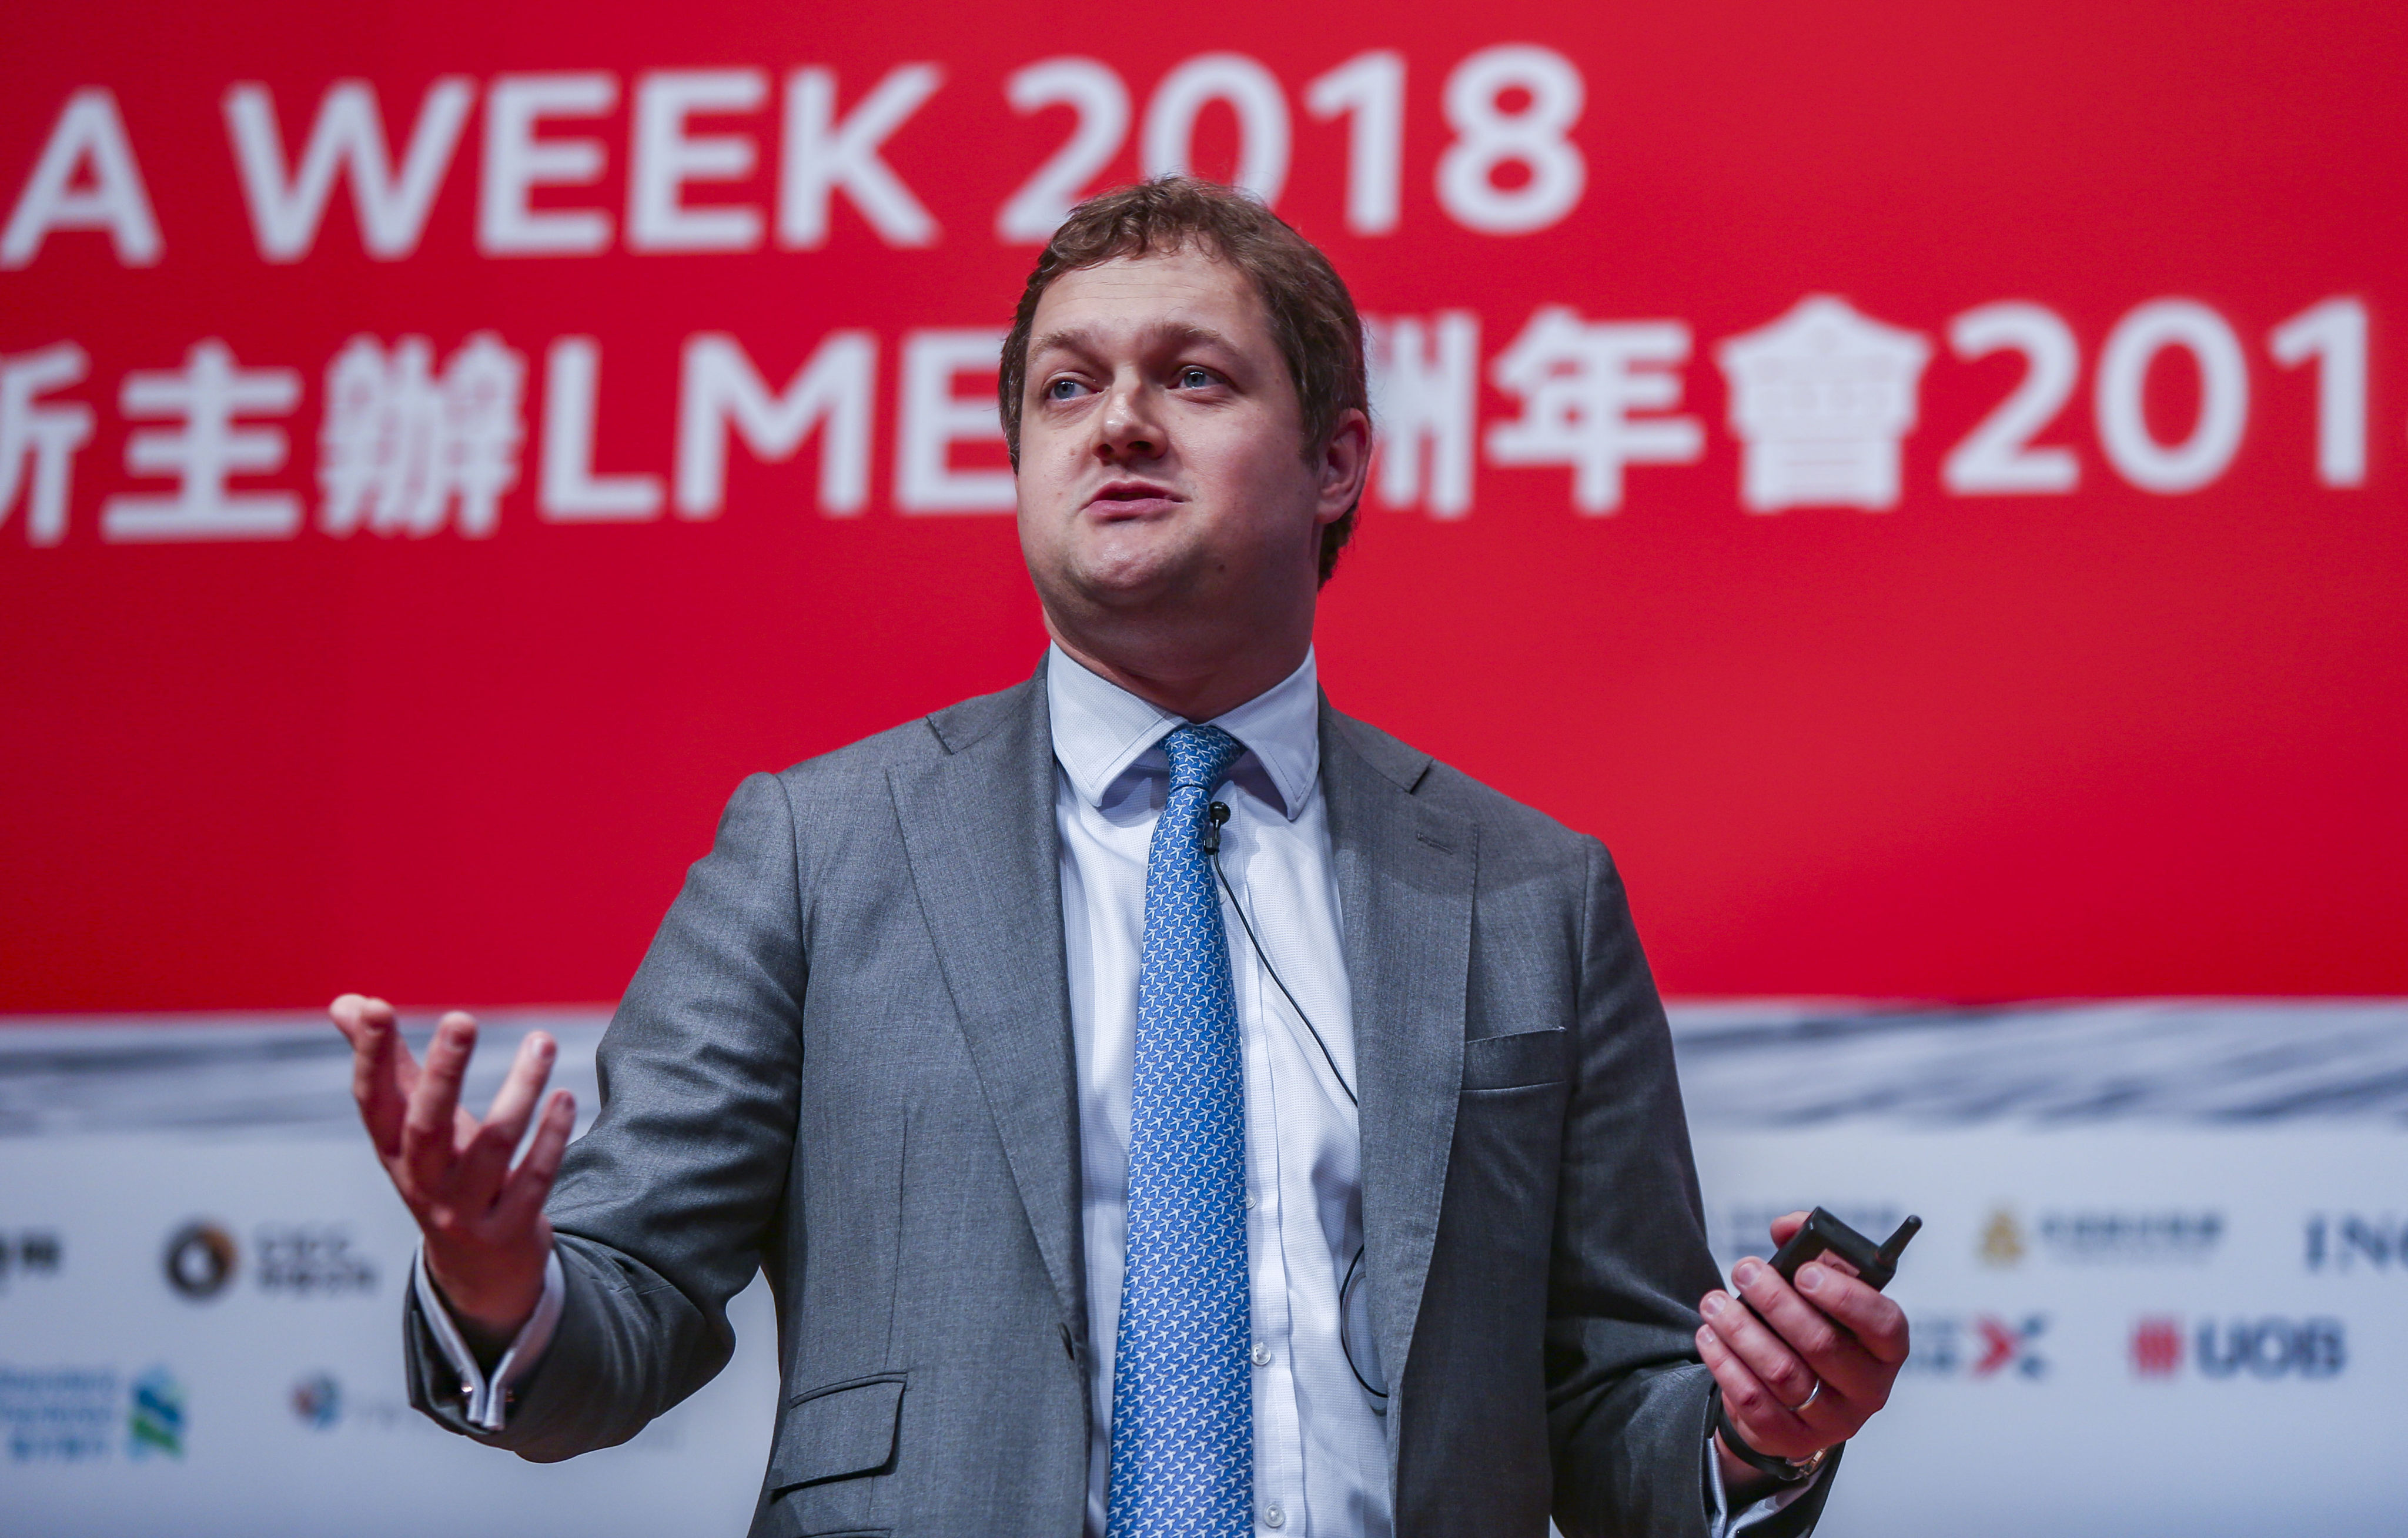 London Metal Exchange CEO Matthew Chamberlain speaks during LME Asia Week in Wan Chai in 2018. Photo: Xiaomei Chen